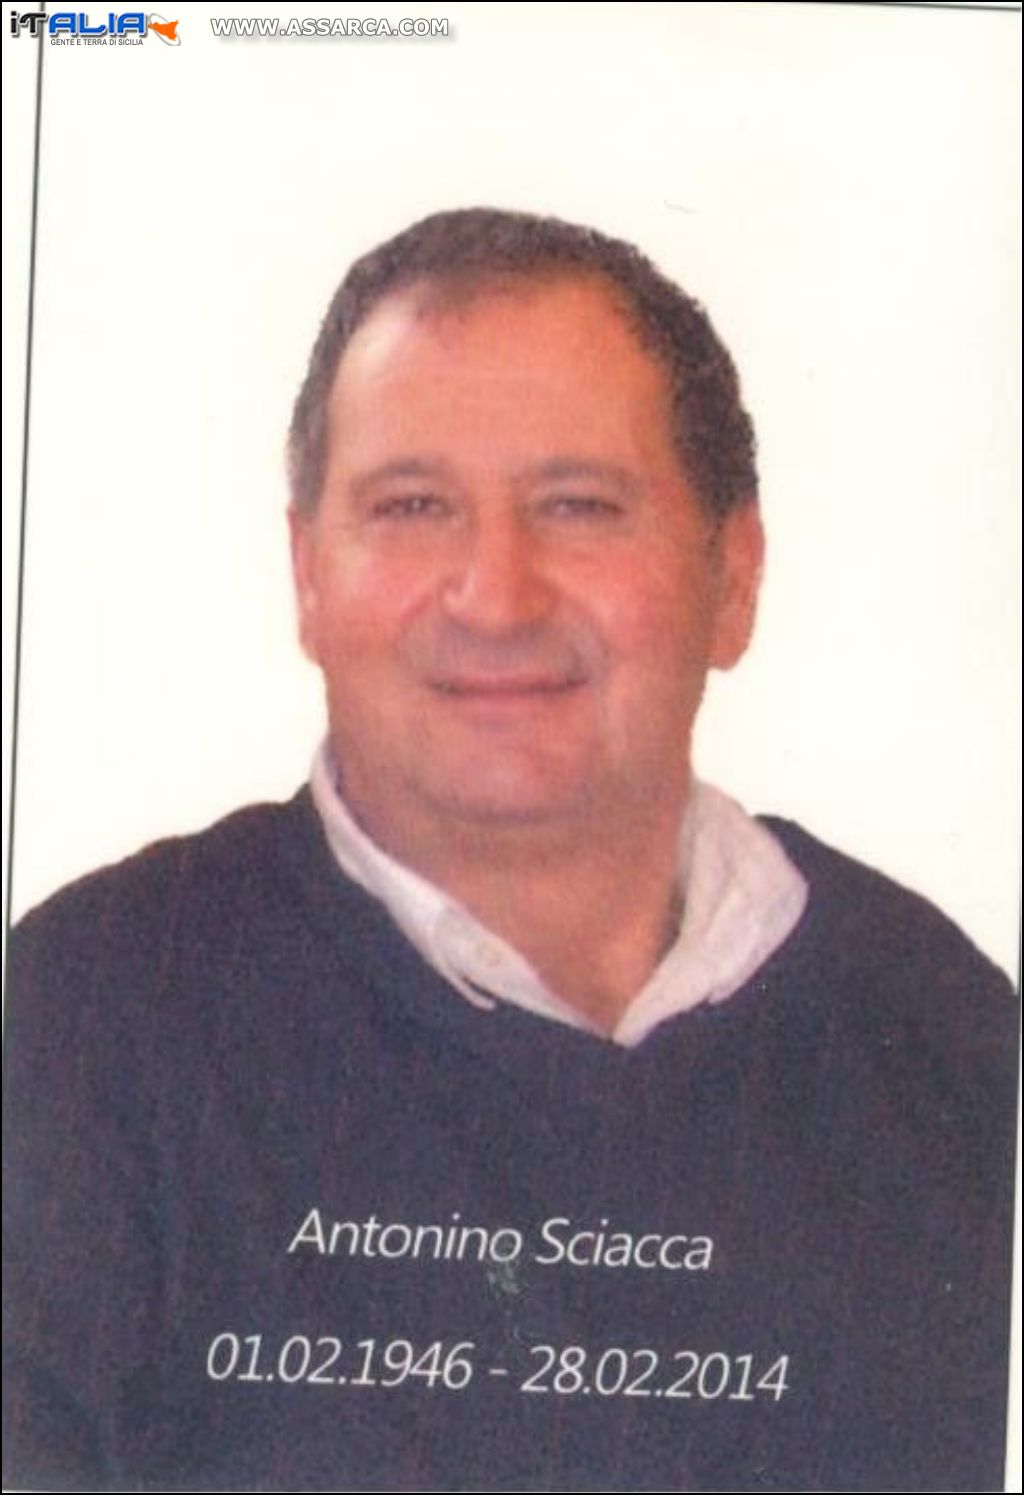 Nino Sciacca